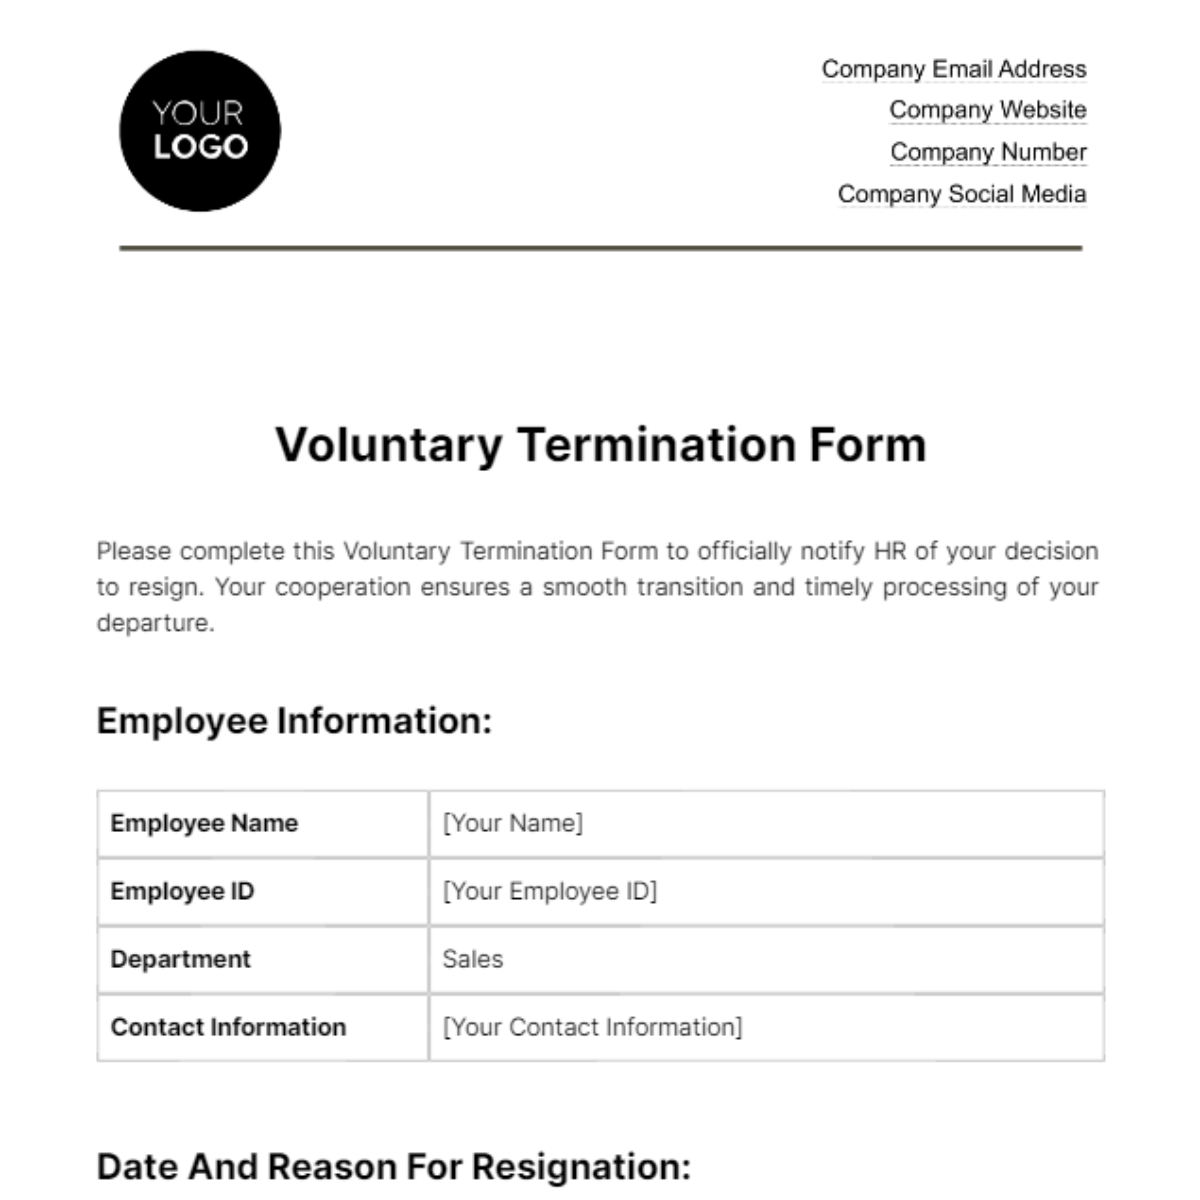 Voluntary Termination Form HR Template